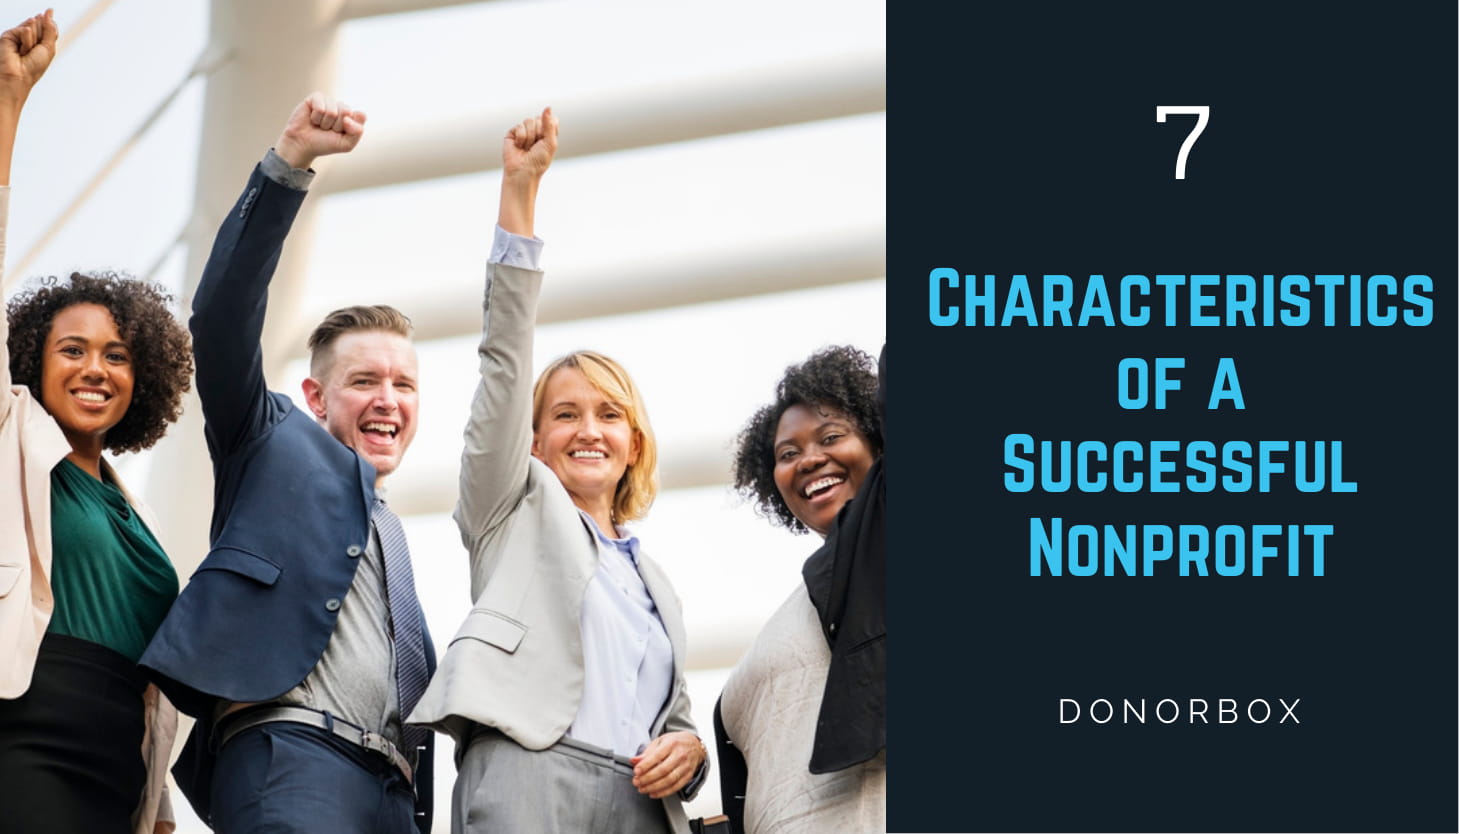 7 Key Characteristics of Successful Nonprofit Organizations